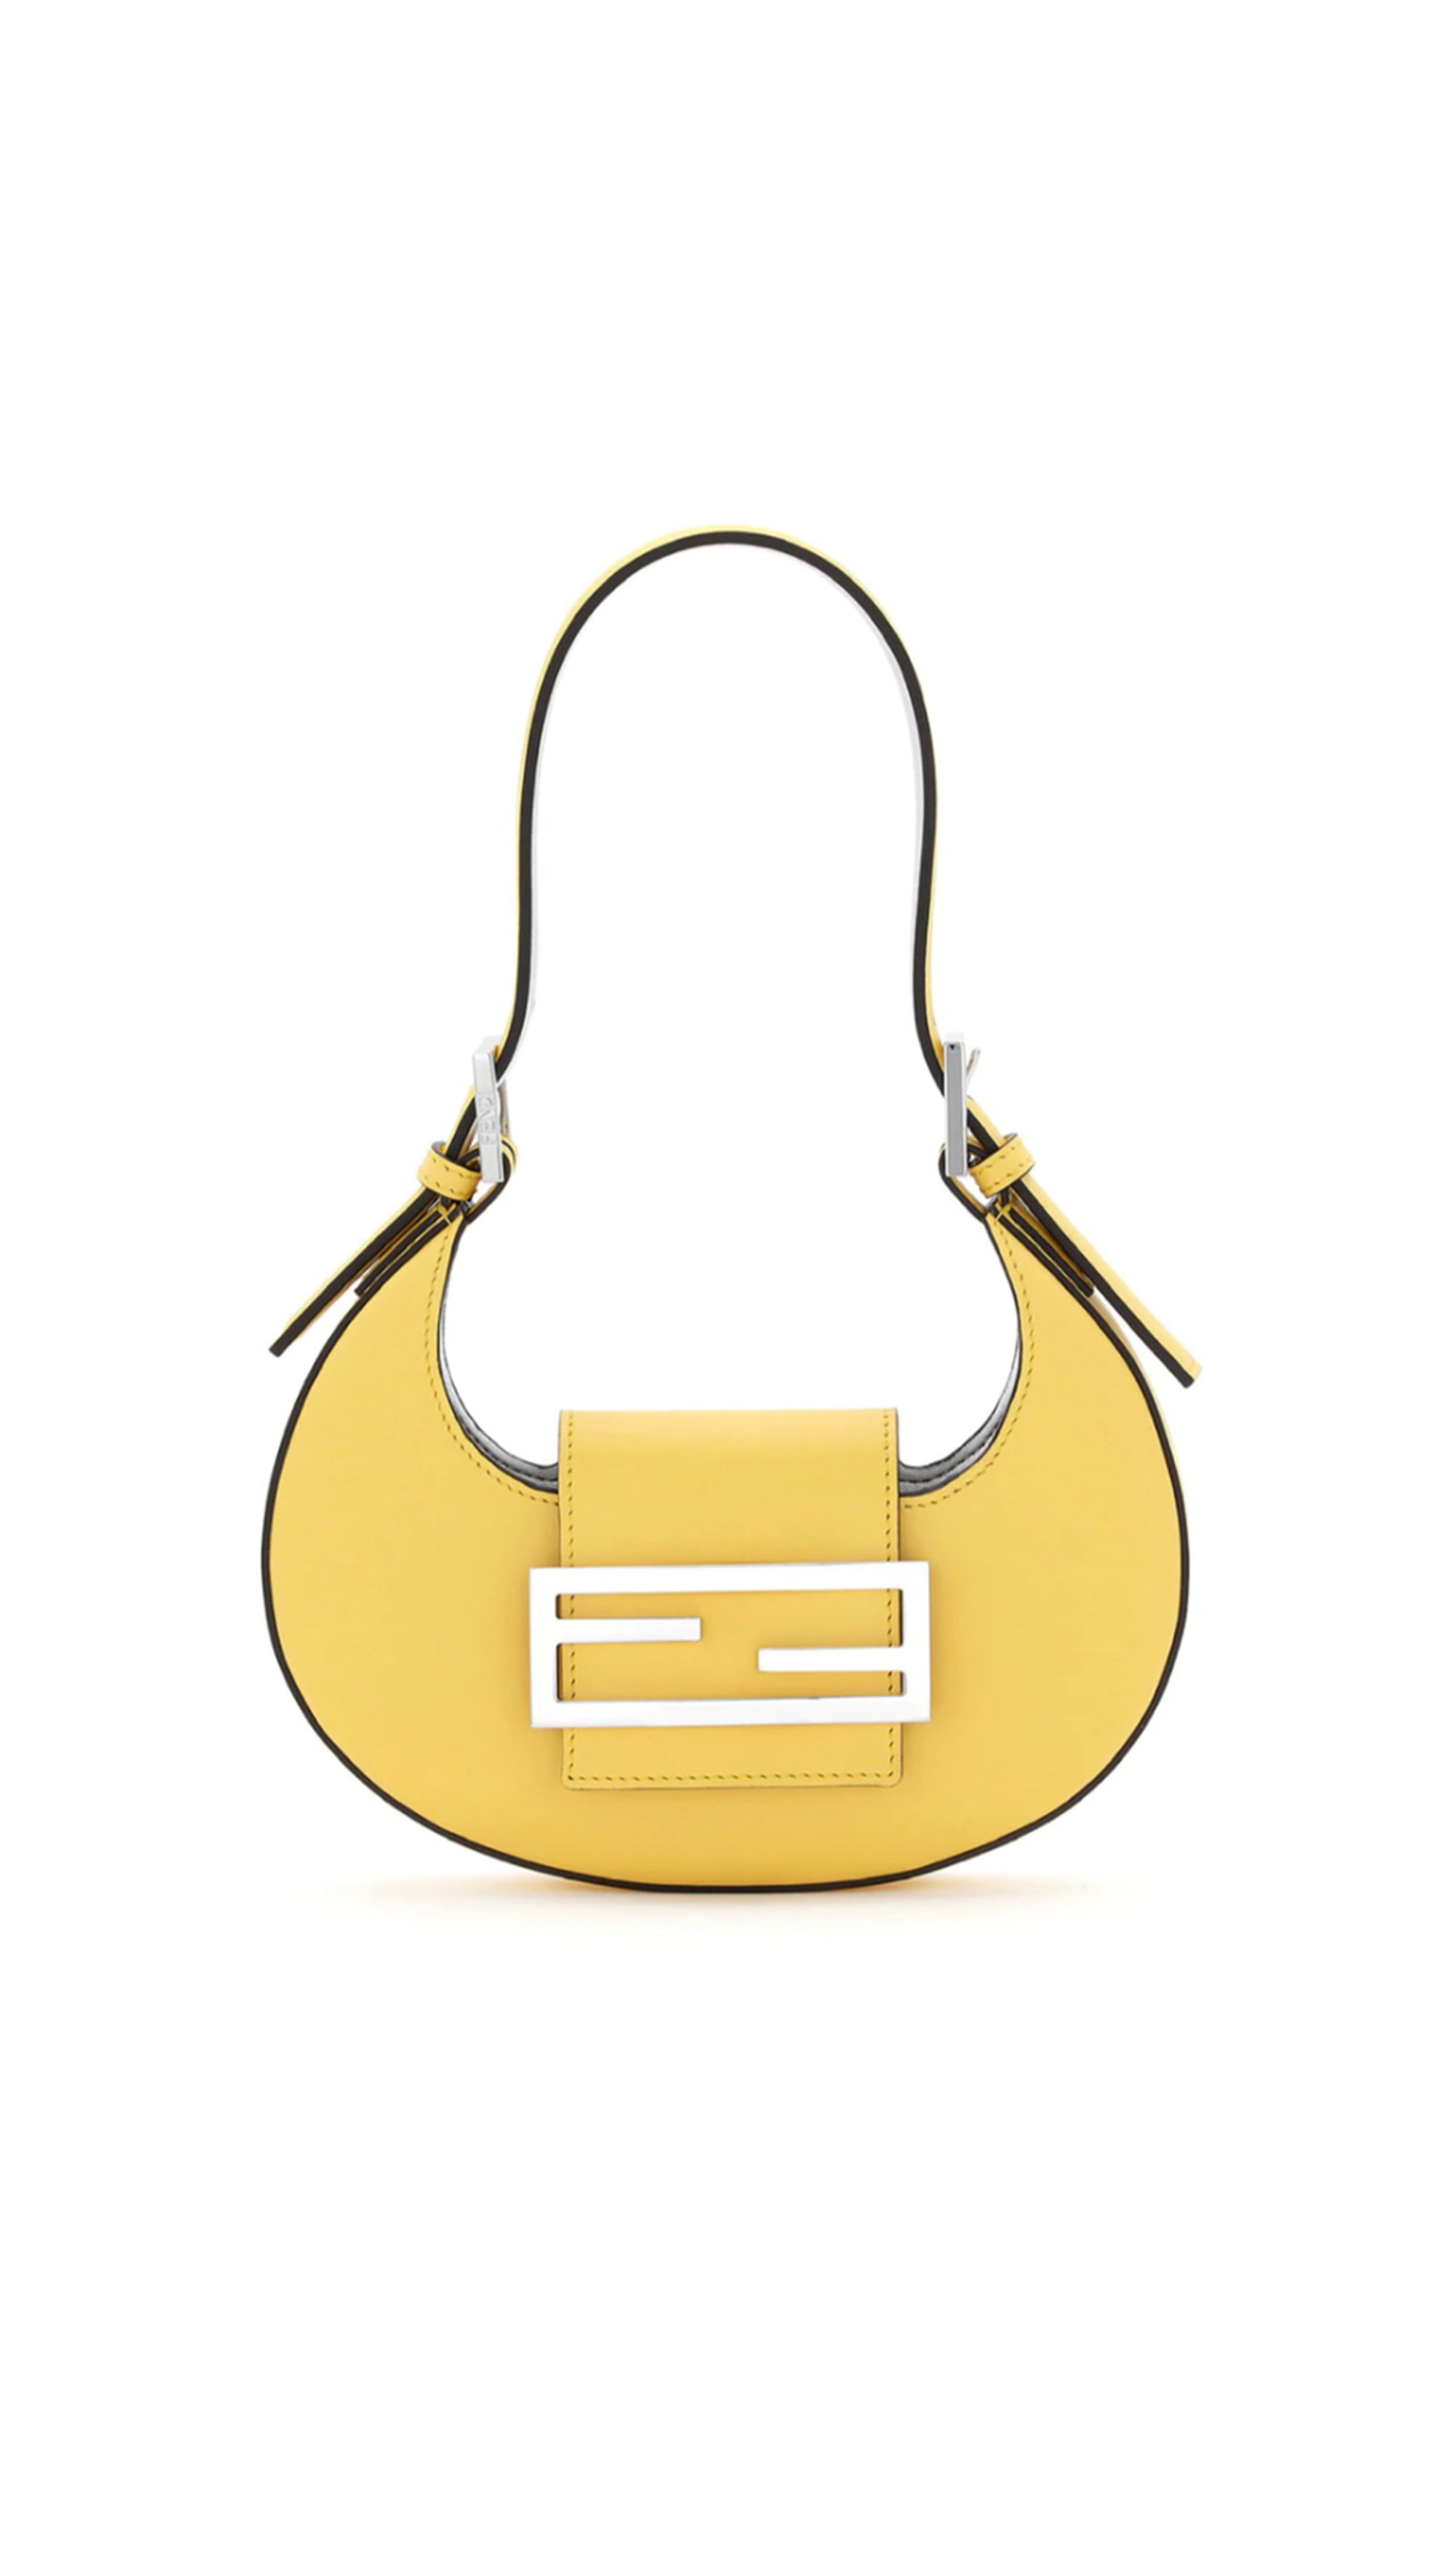 FENDI: Croissant leather bag - Yellow